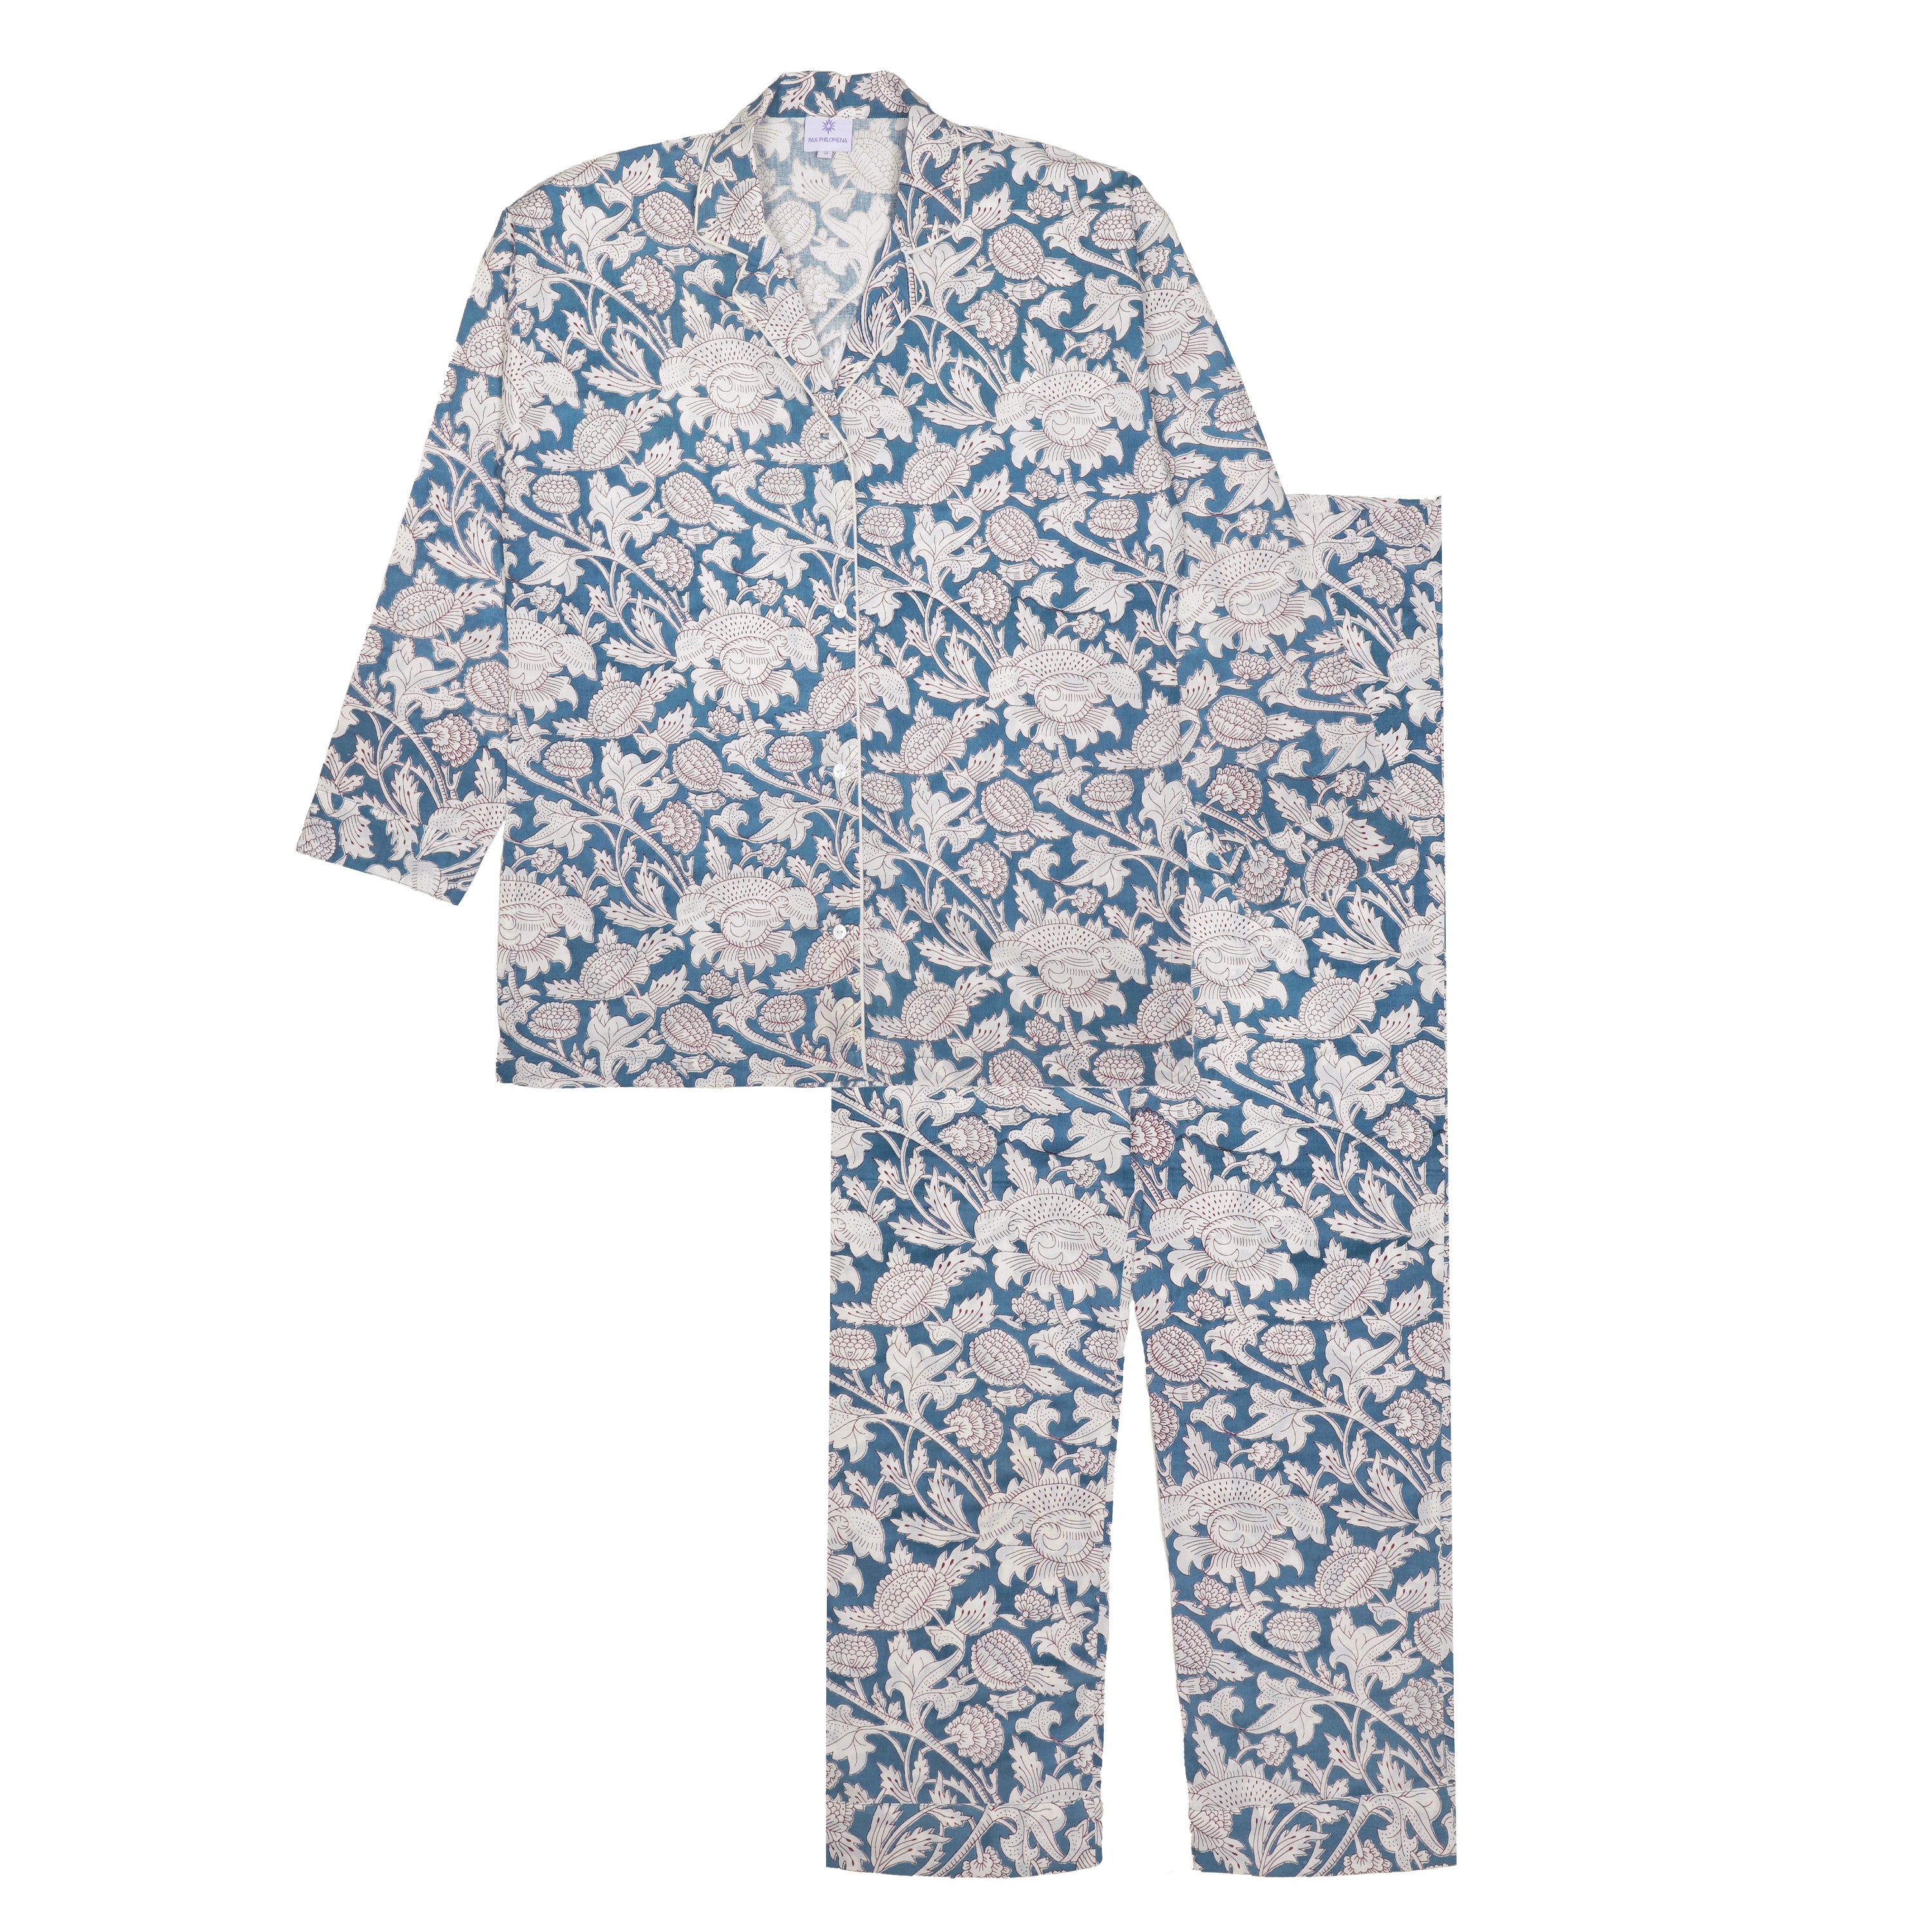 Laura Pewter Cotton Pajamas Long Sleeve STORE CREDIT